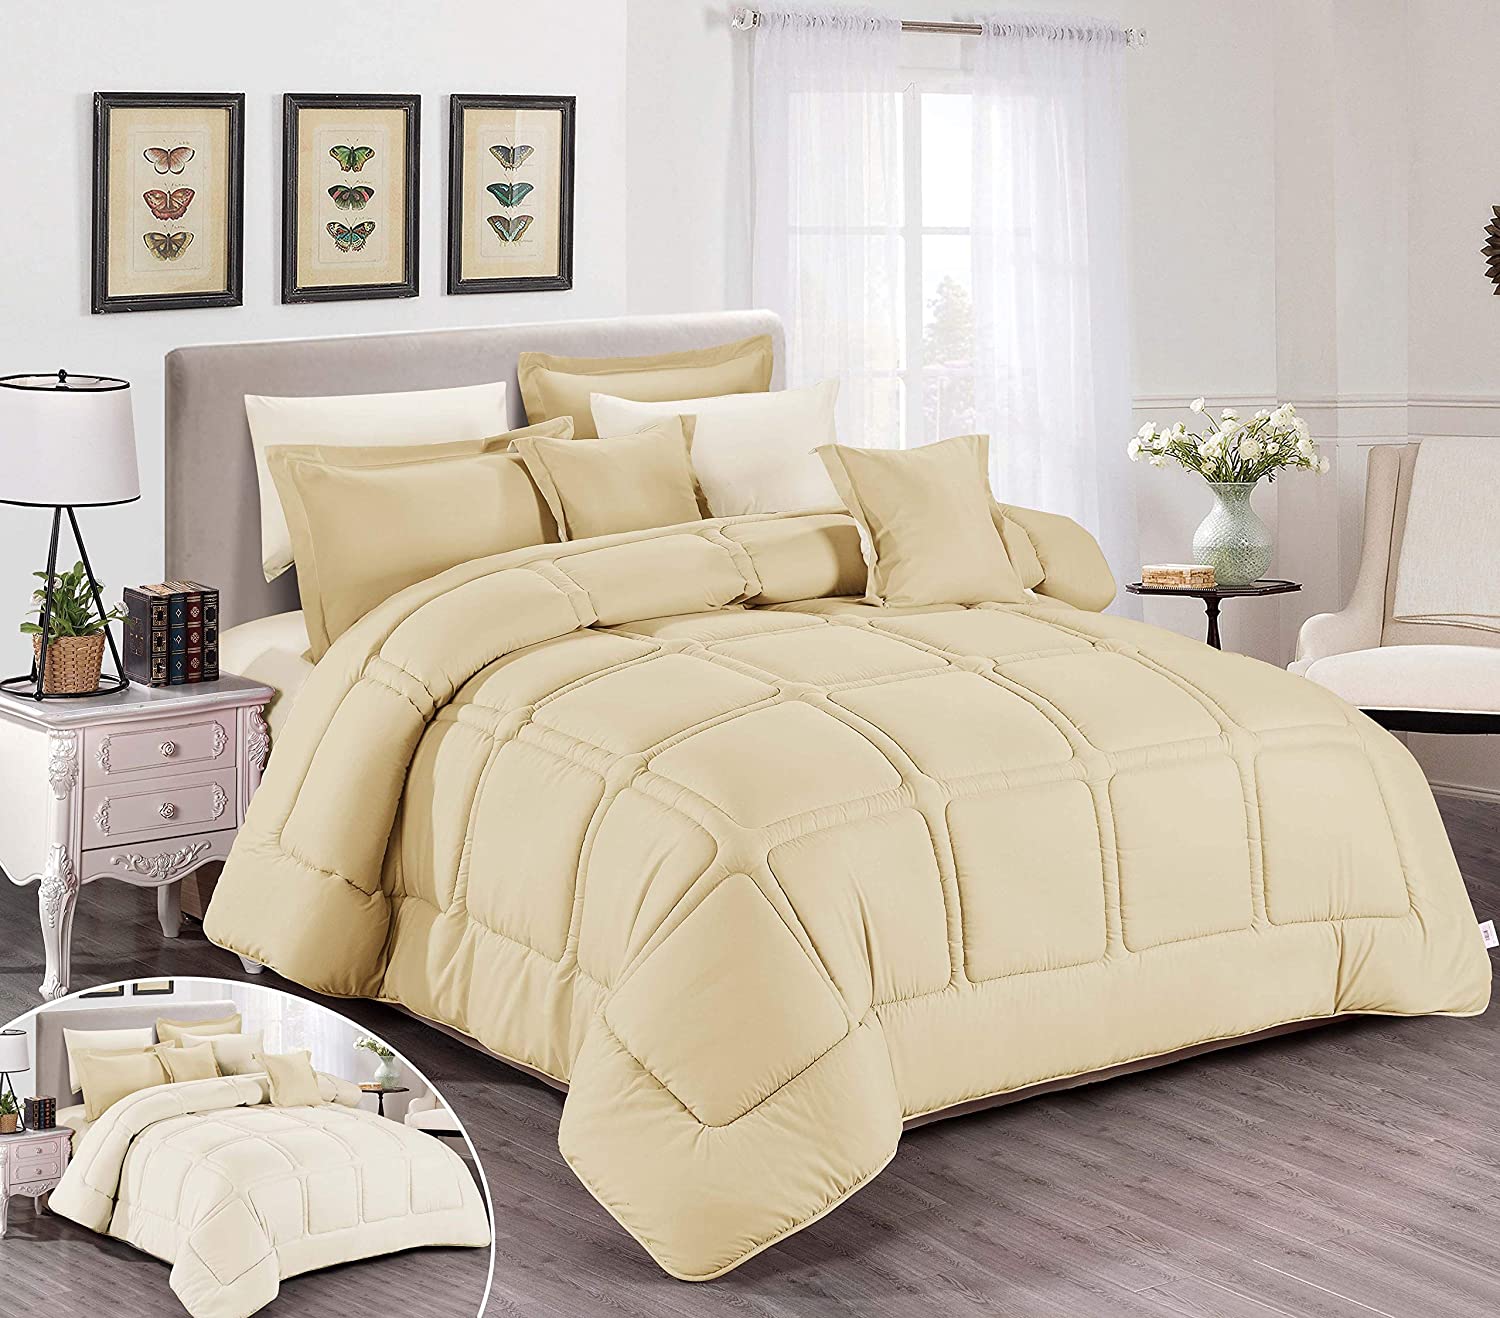 Stargold Solid Comforter 8 Pieces Set Soft Microfiber Beige 260x240cm